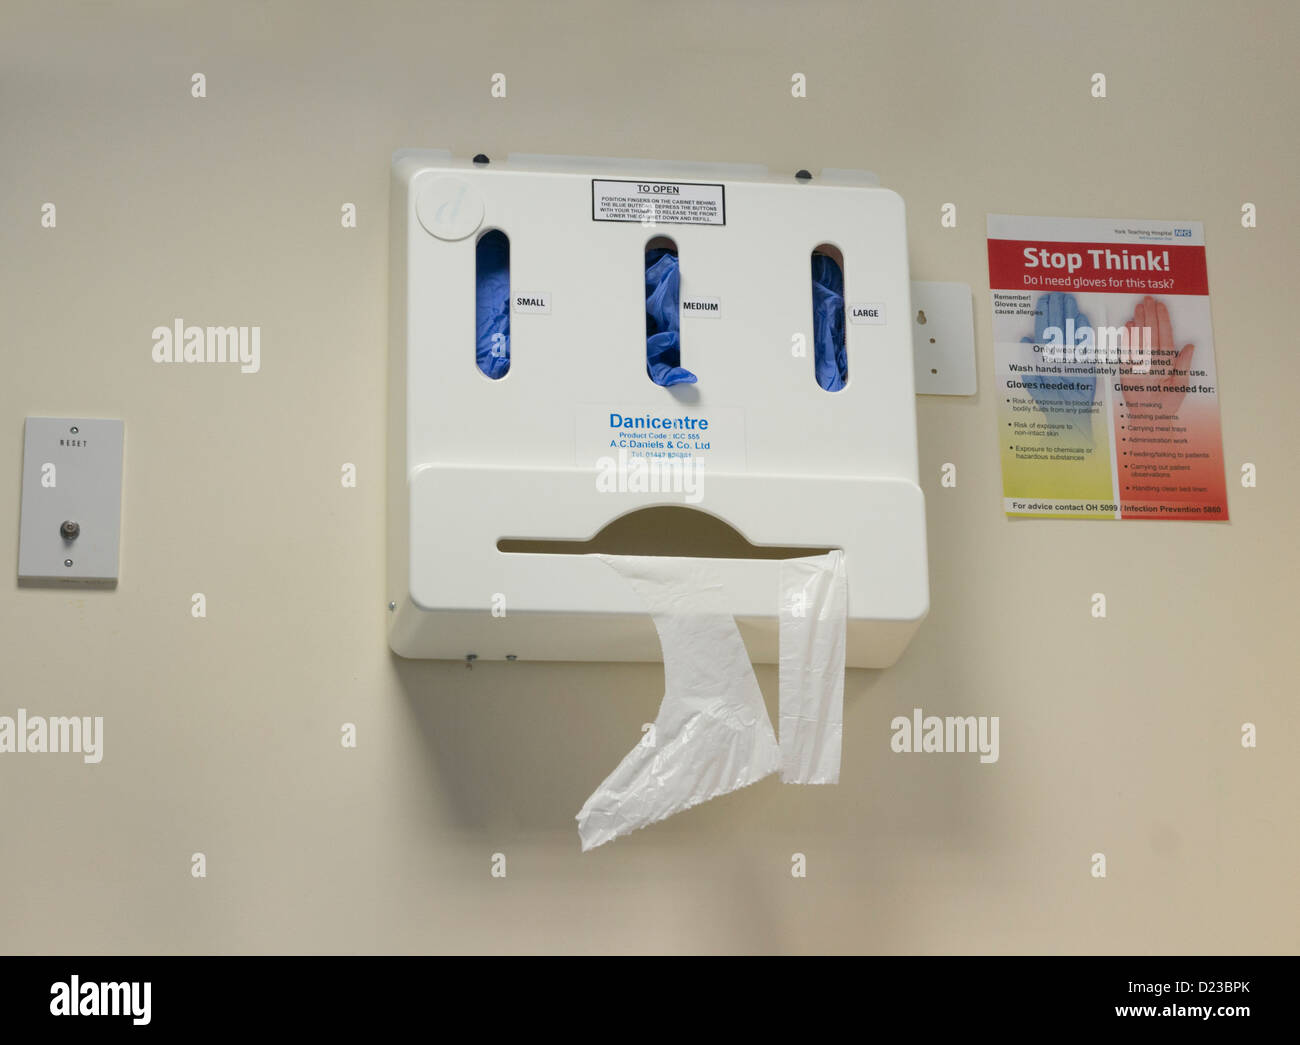 Latex glove dispenser in a hospital. Stock Photo